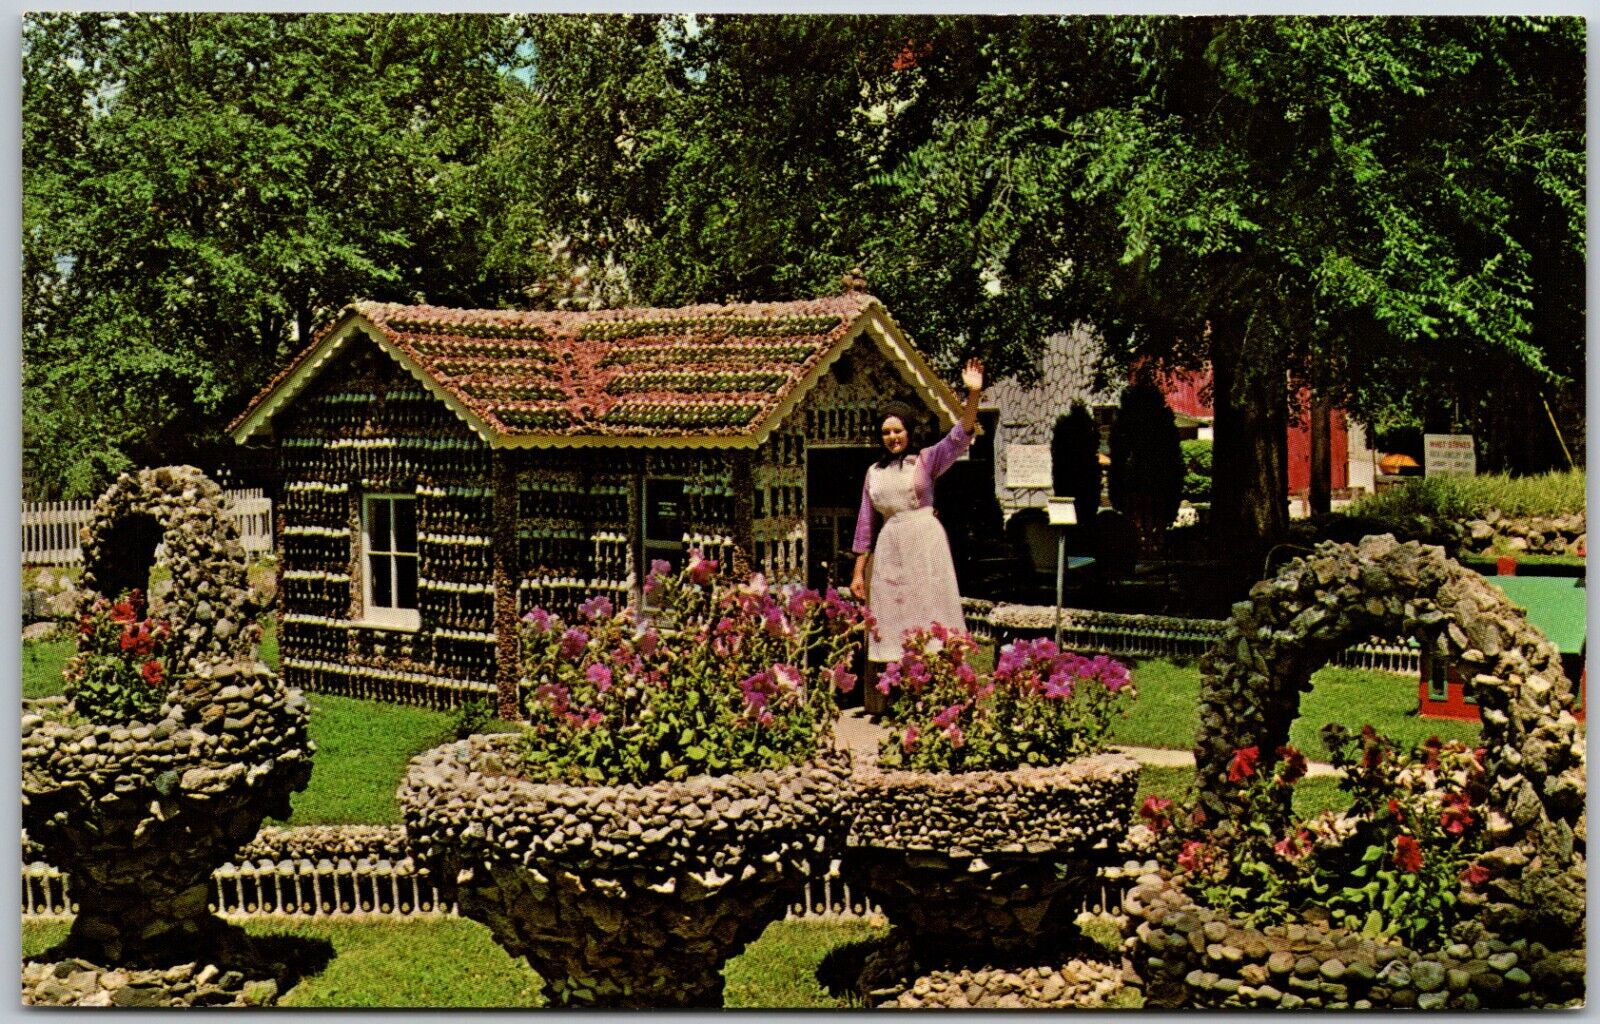 Greetings from Rockome Gardens, Arcola, Illinois - Postcard